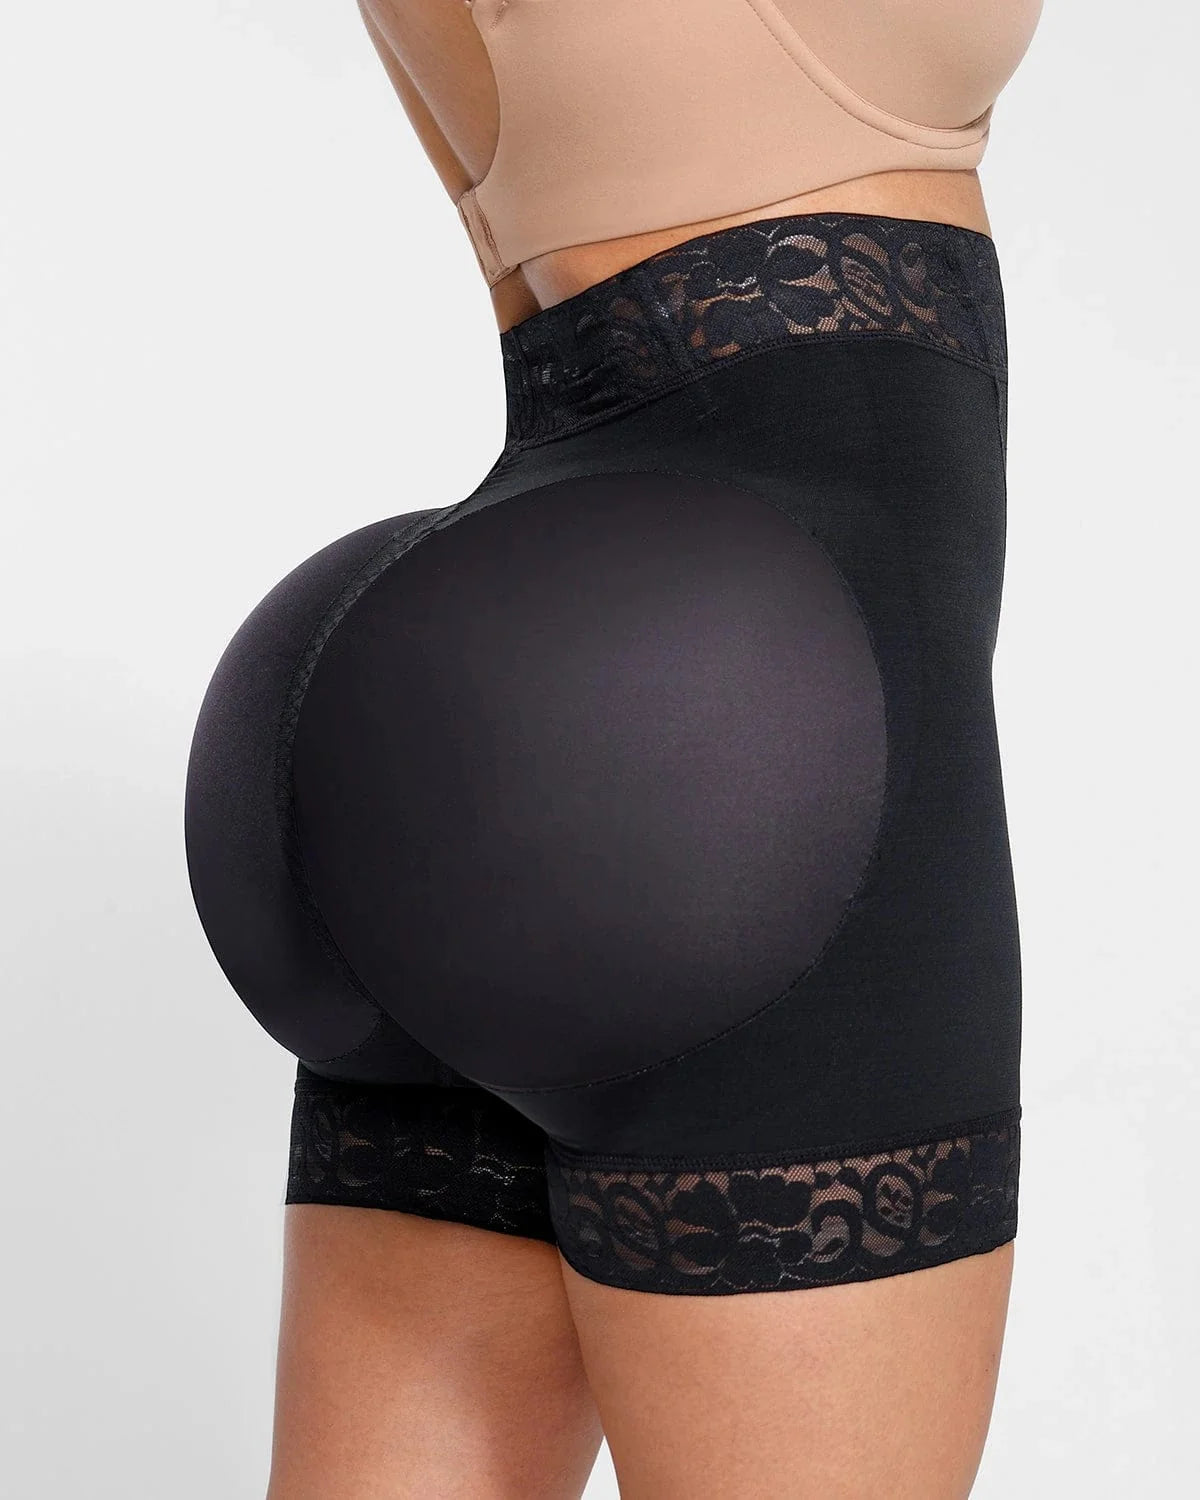 PerfectFit™ Lace Butt-Lifting Panty Everrd